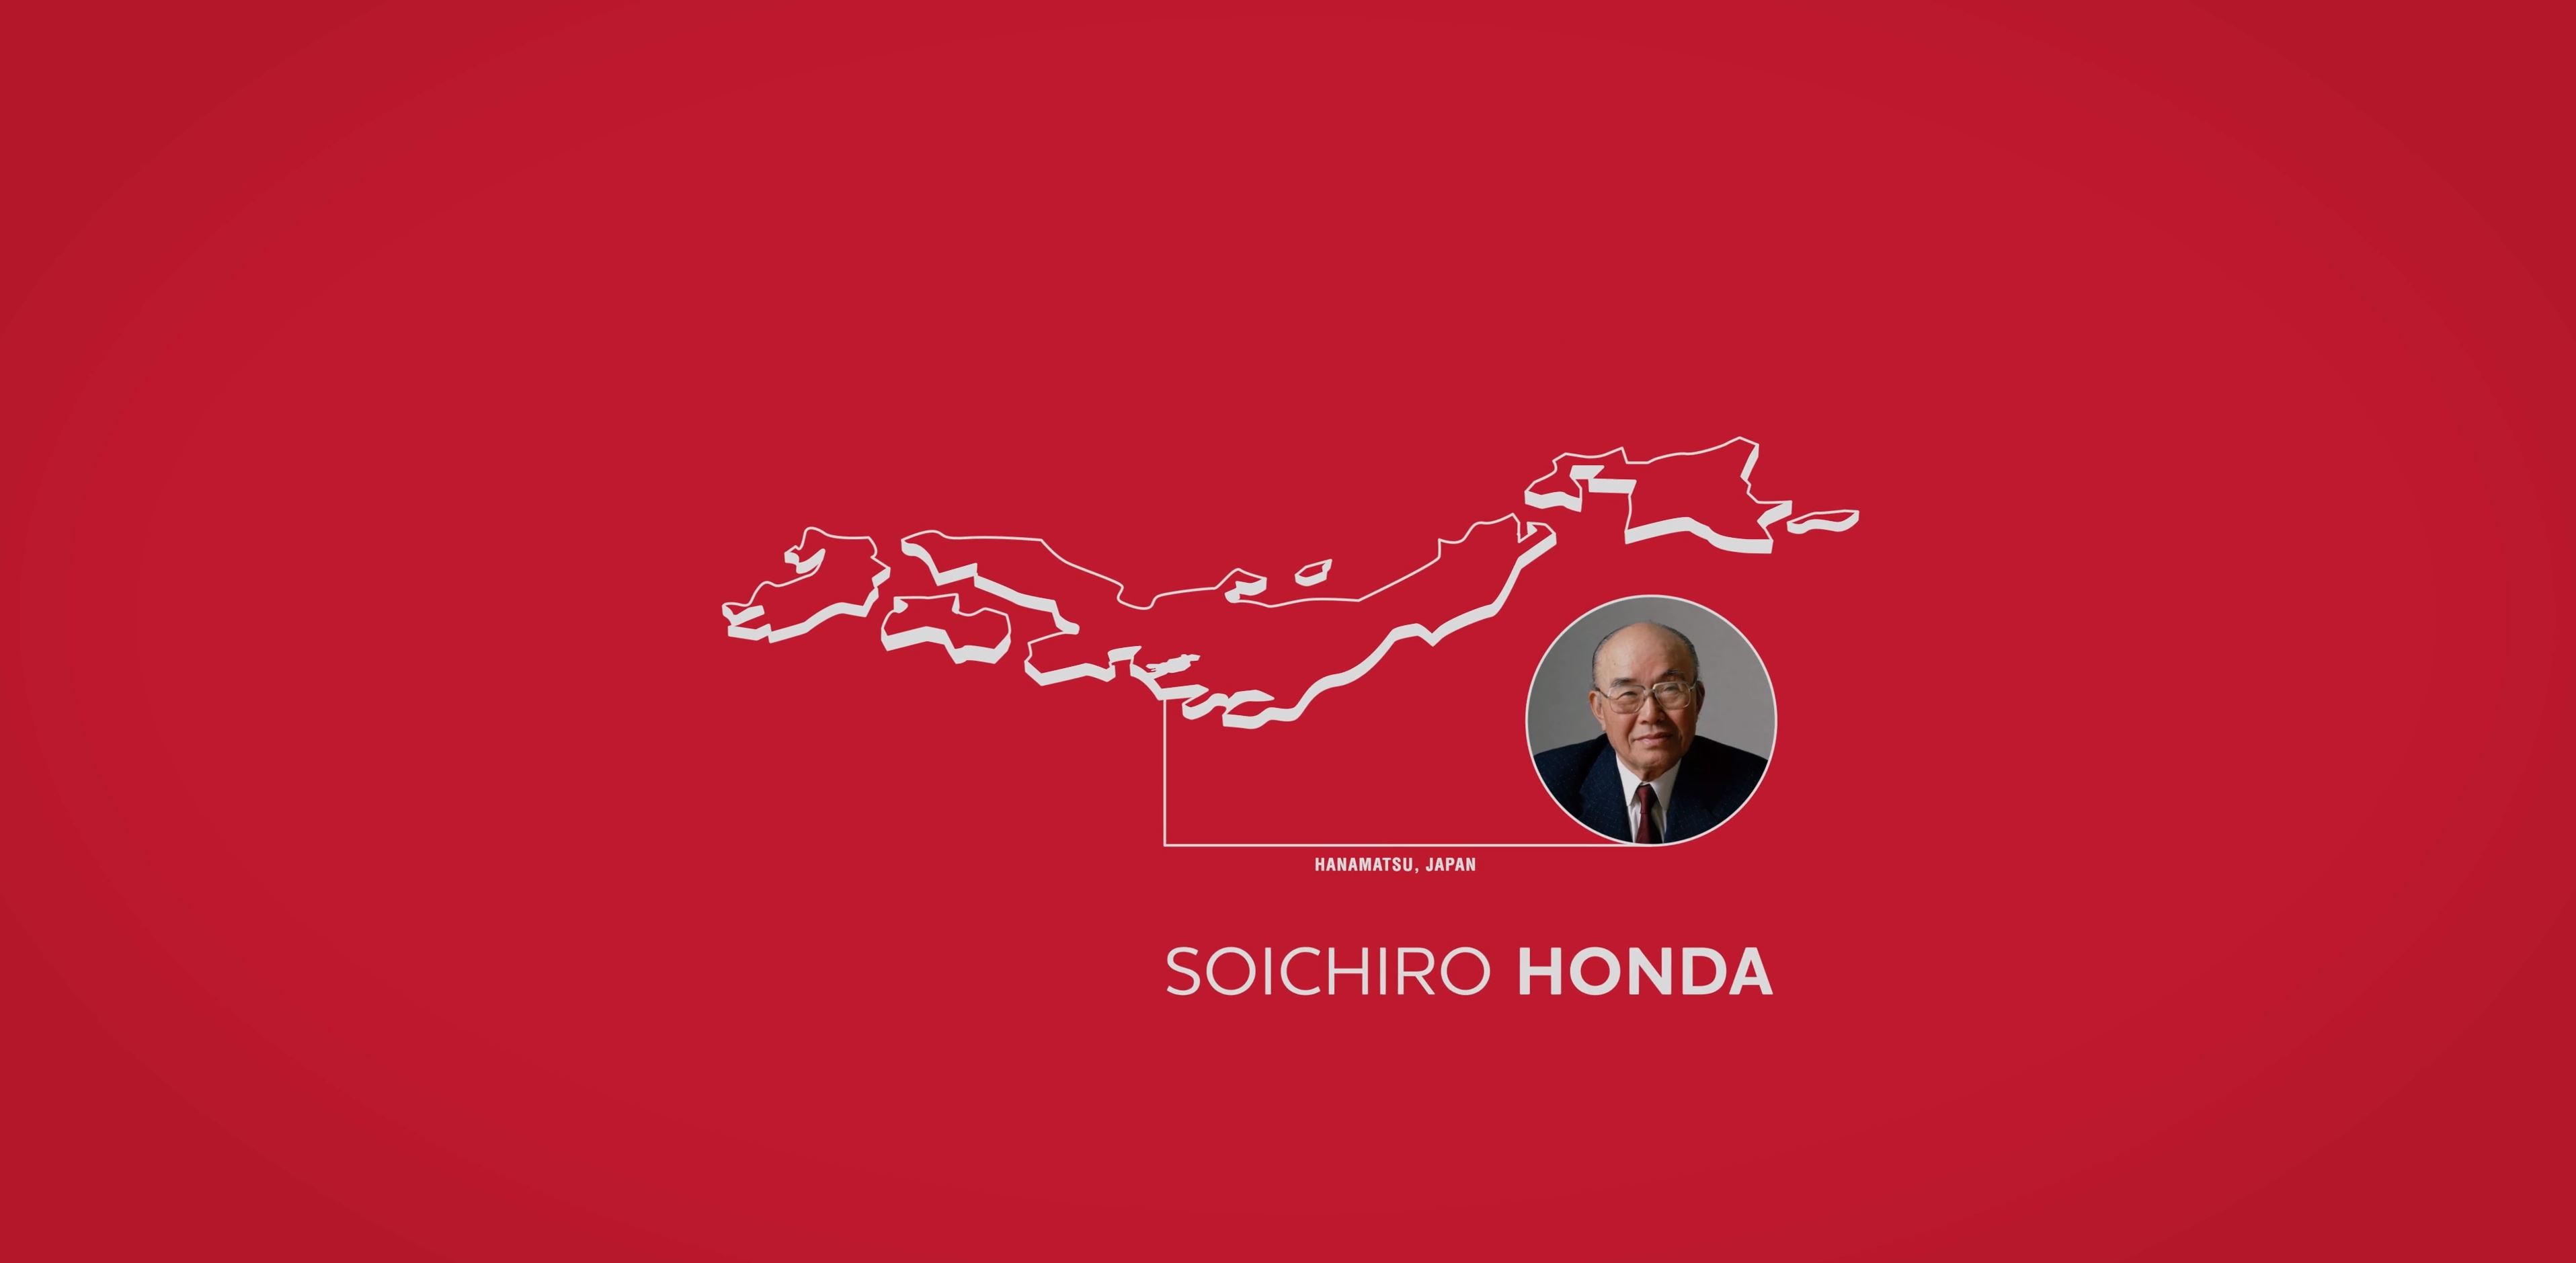 Client Visual For Honda